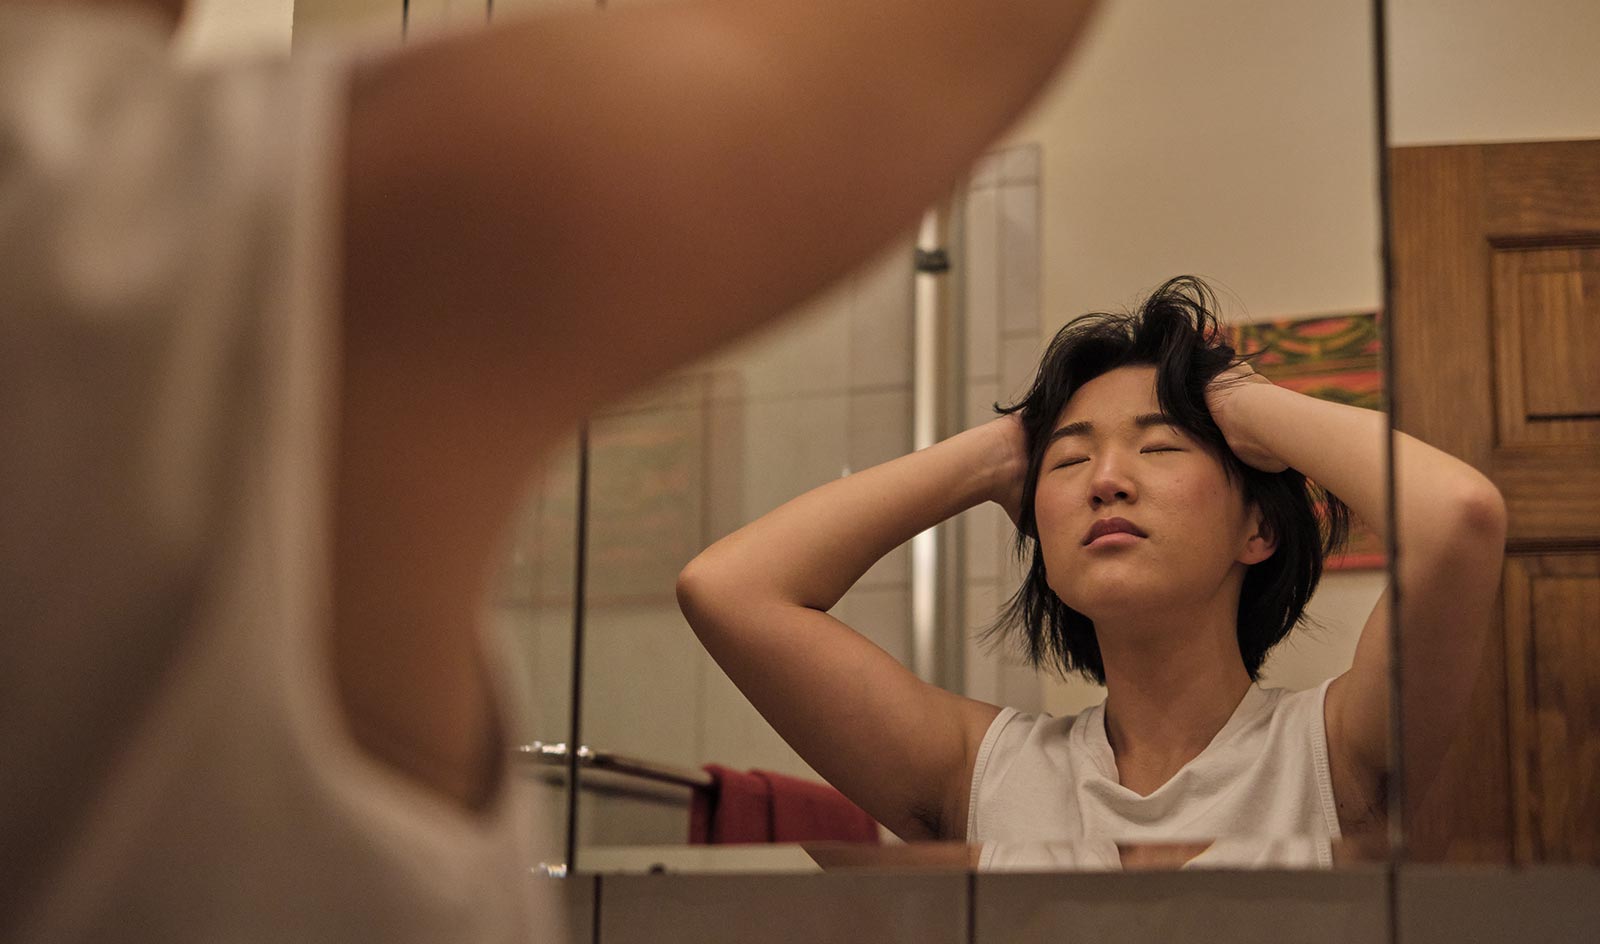 Non-binary person massages head and takes a deep breath facing bathroom mirror